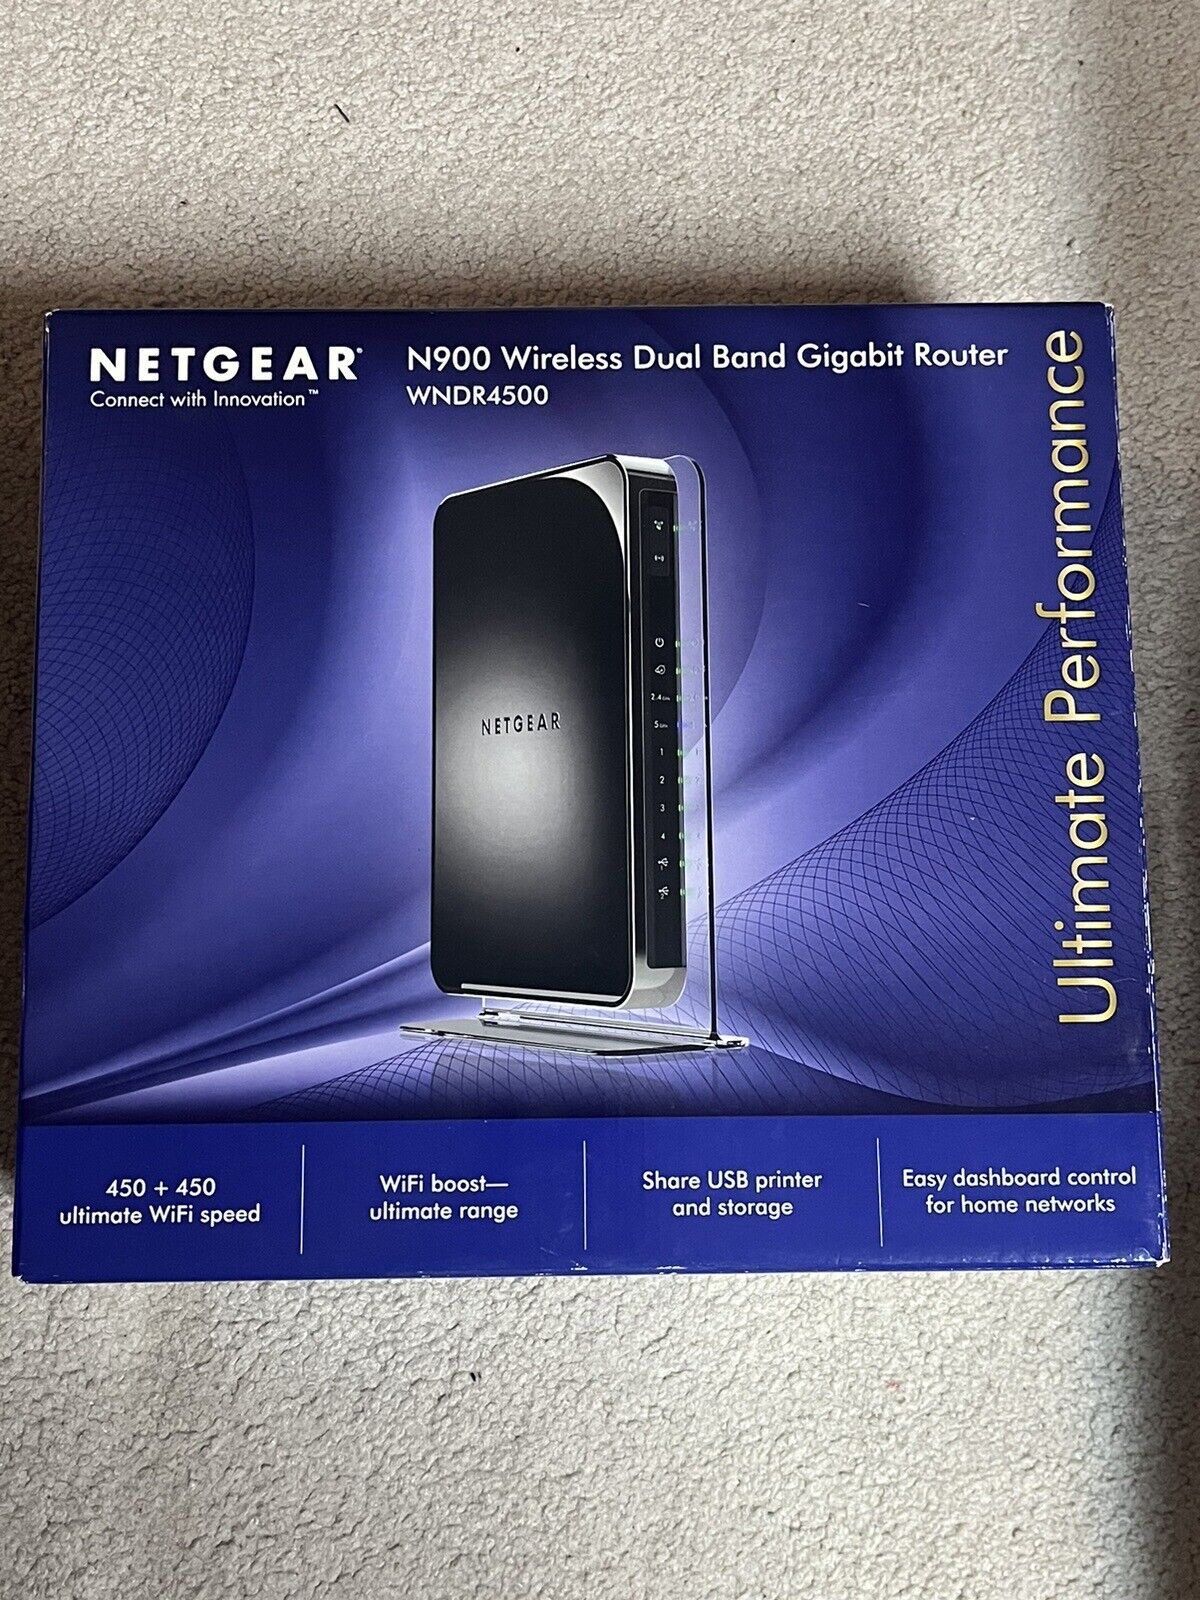 Netgear N900 Wireless Dual Band Gigabit Router Model WNDR4500 (Open Box)